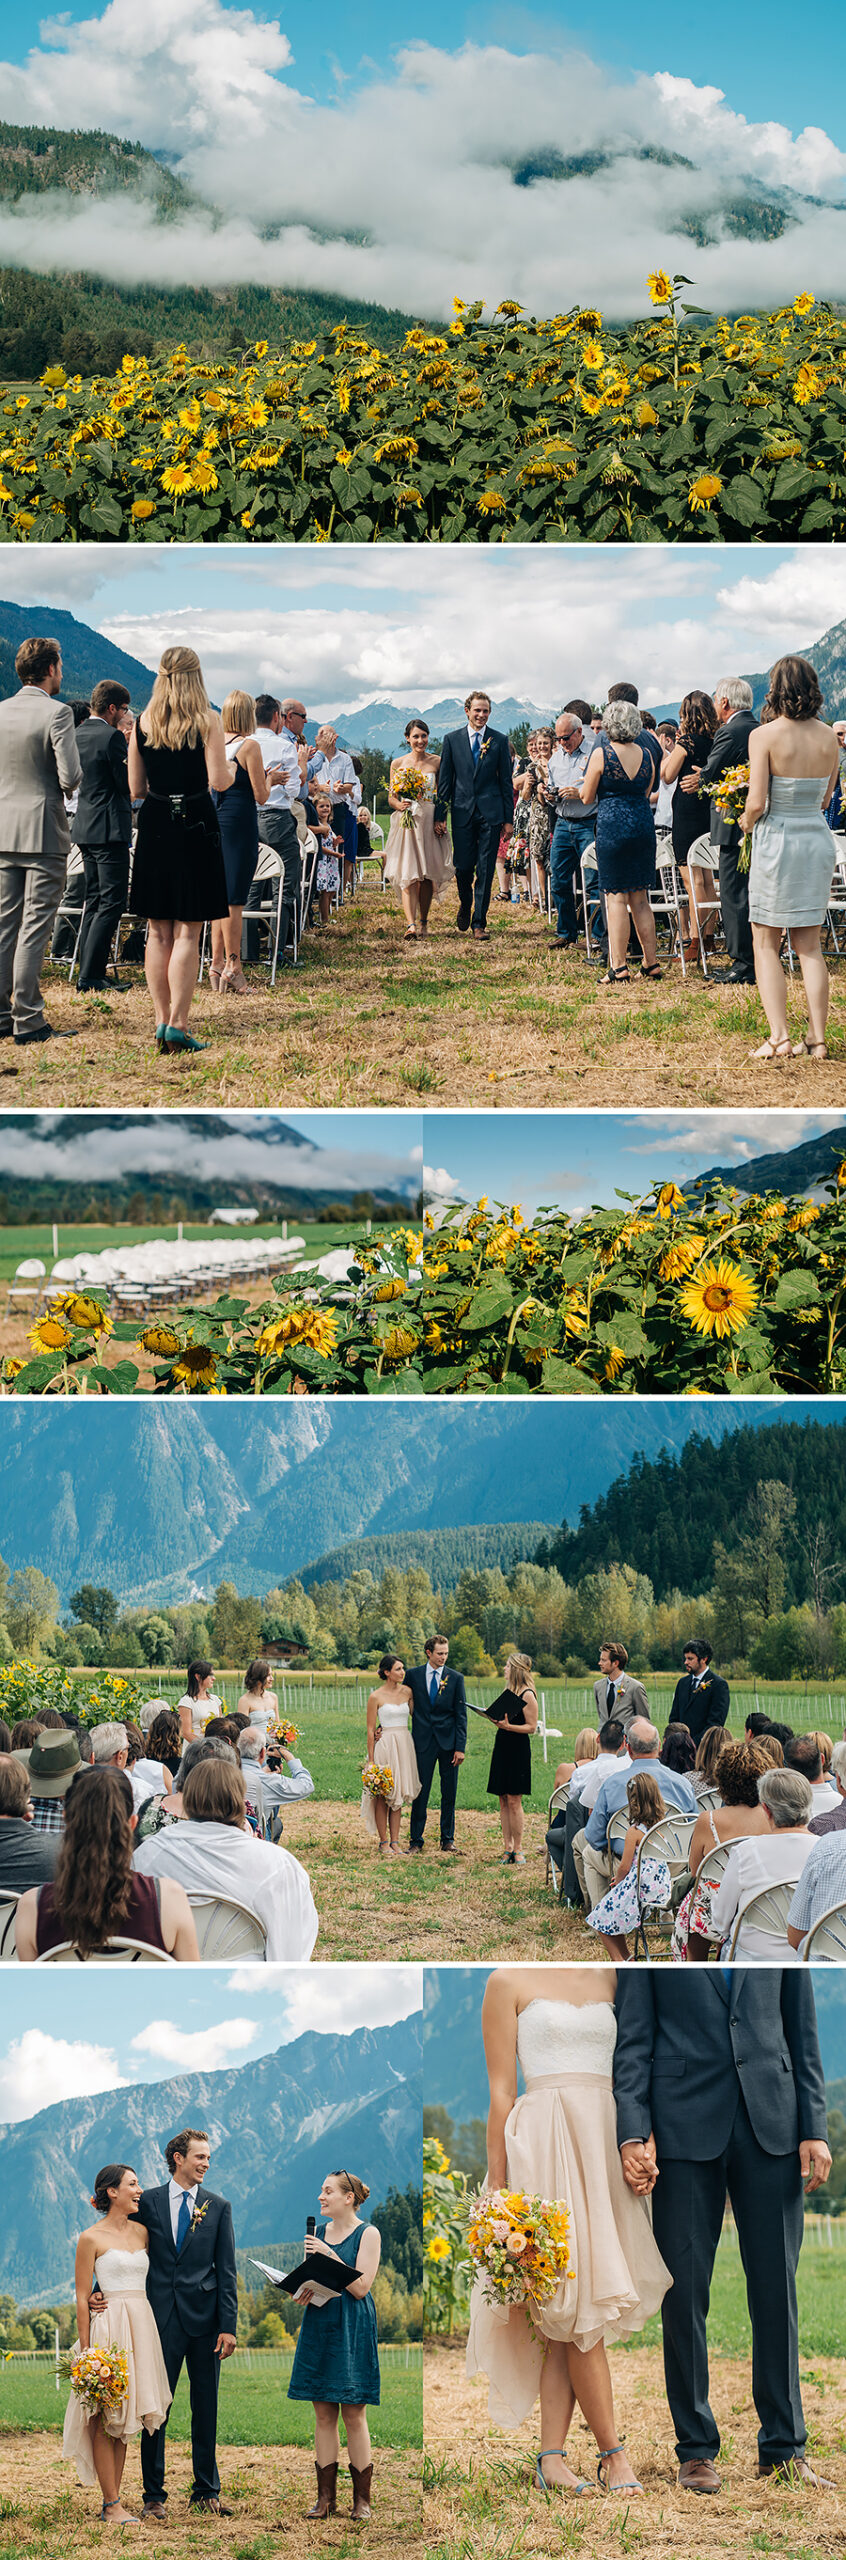 Pemberton meadows, farm wedding, ceremony